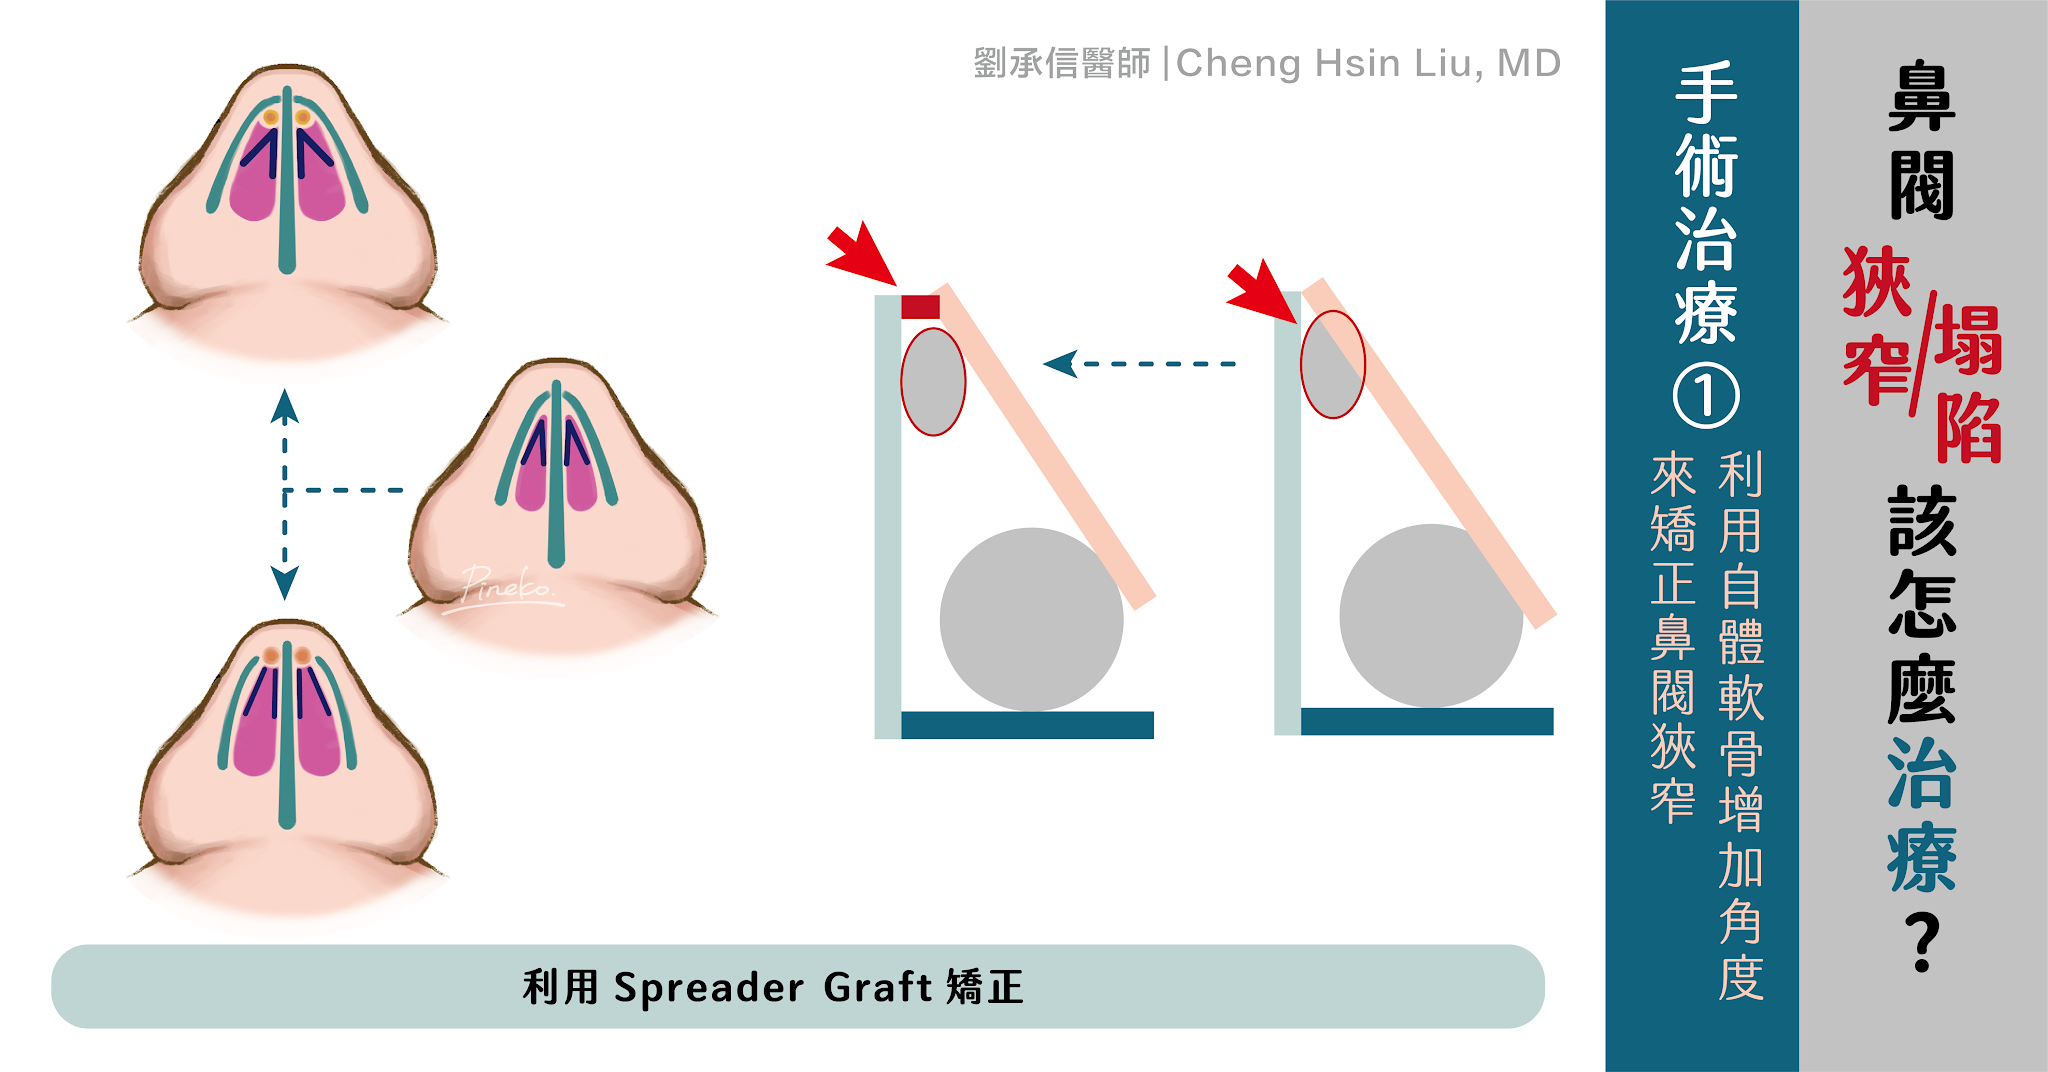 Spreader Graft：針對內鼻閥狹窄非常好用，甚至可以部分支撐鼻中隔過軟的問題，因此也廣泛用在結構式隆鼻當中。